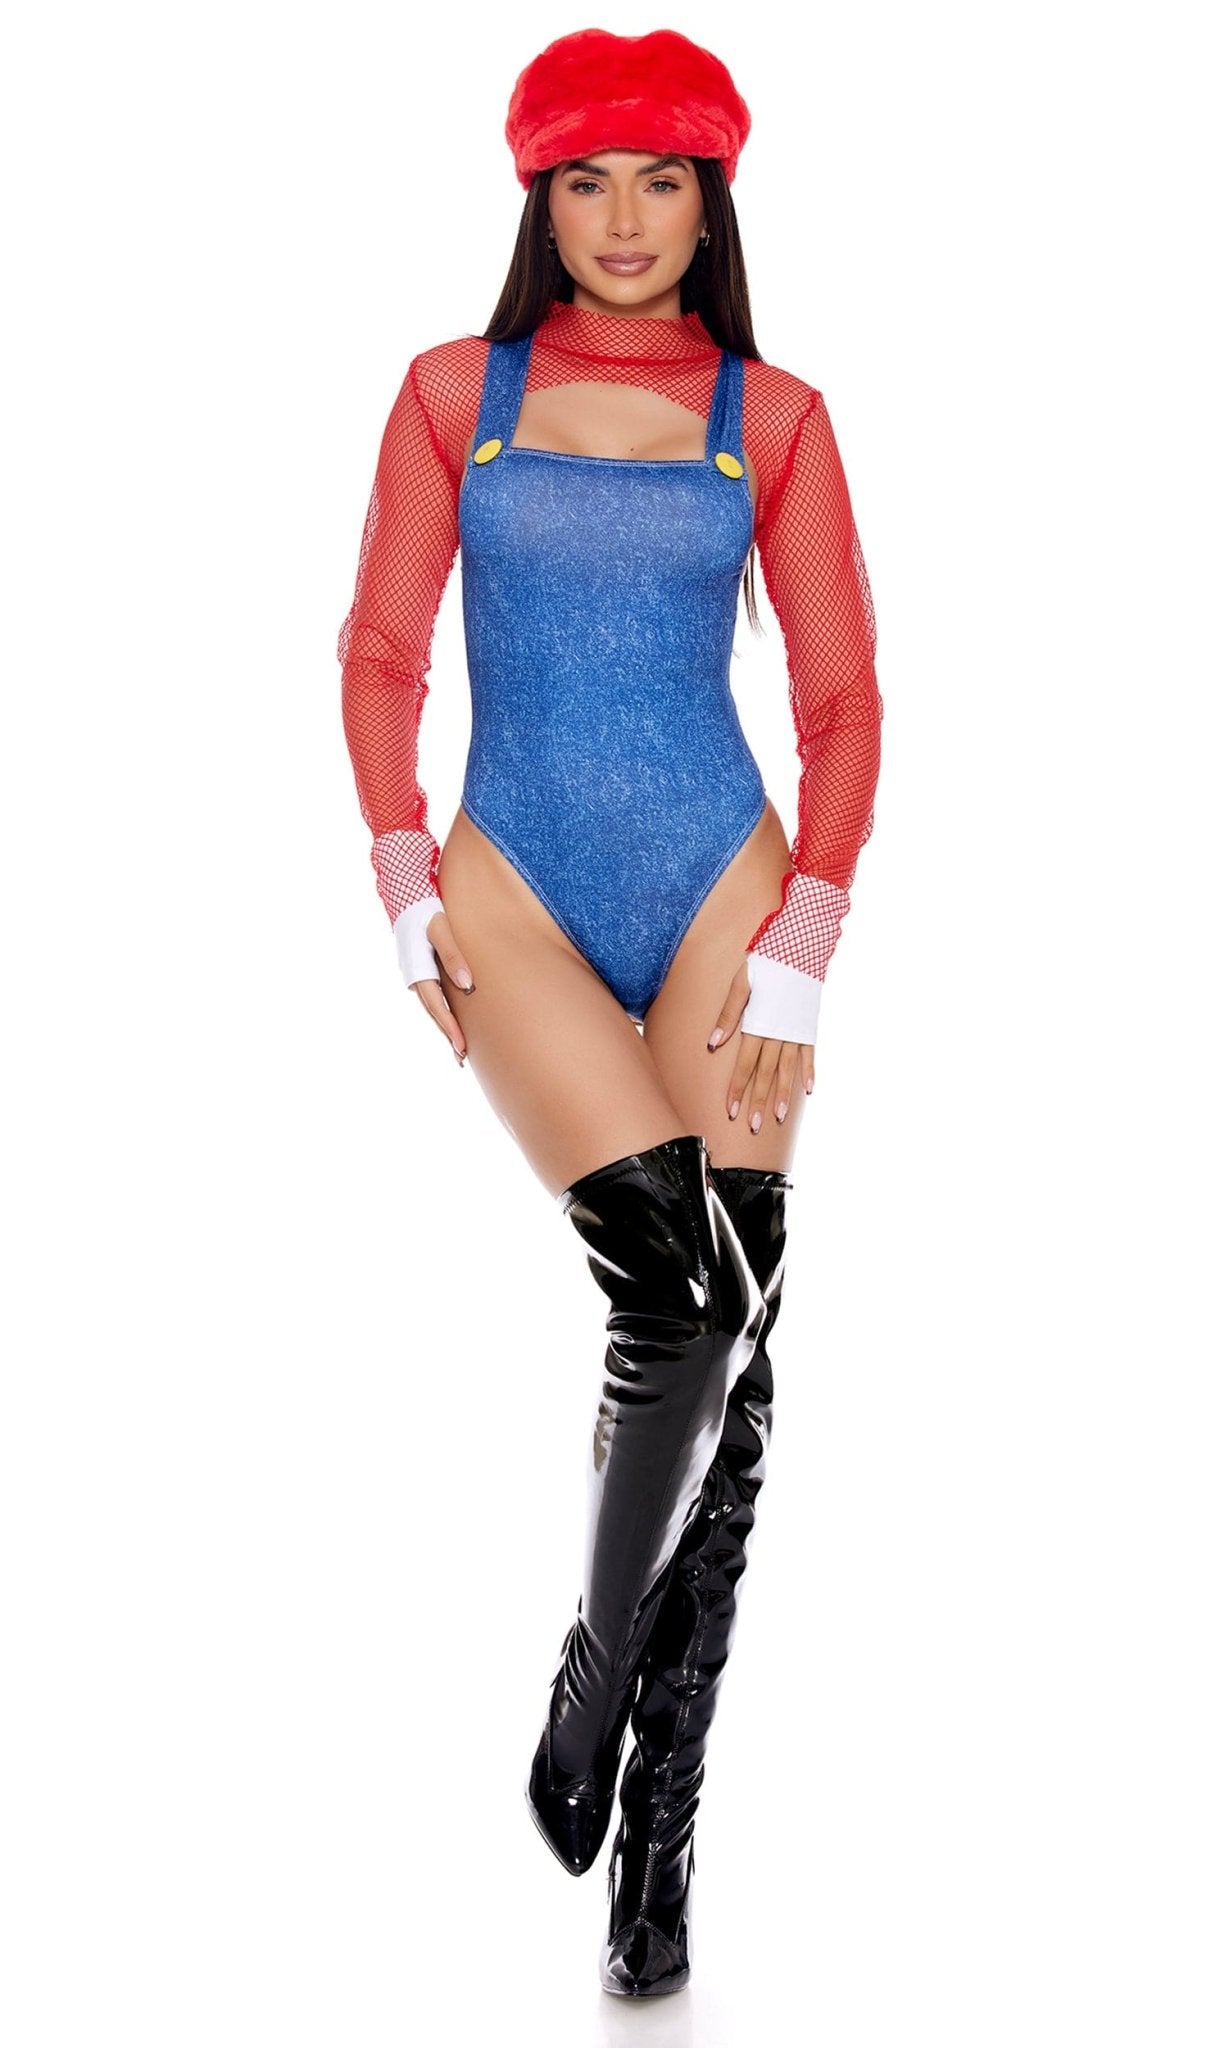 Sexy Video Game Mascot Halloween Costume Musotica.com